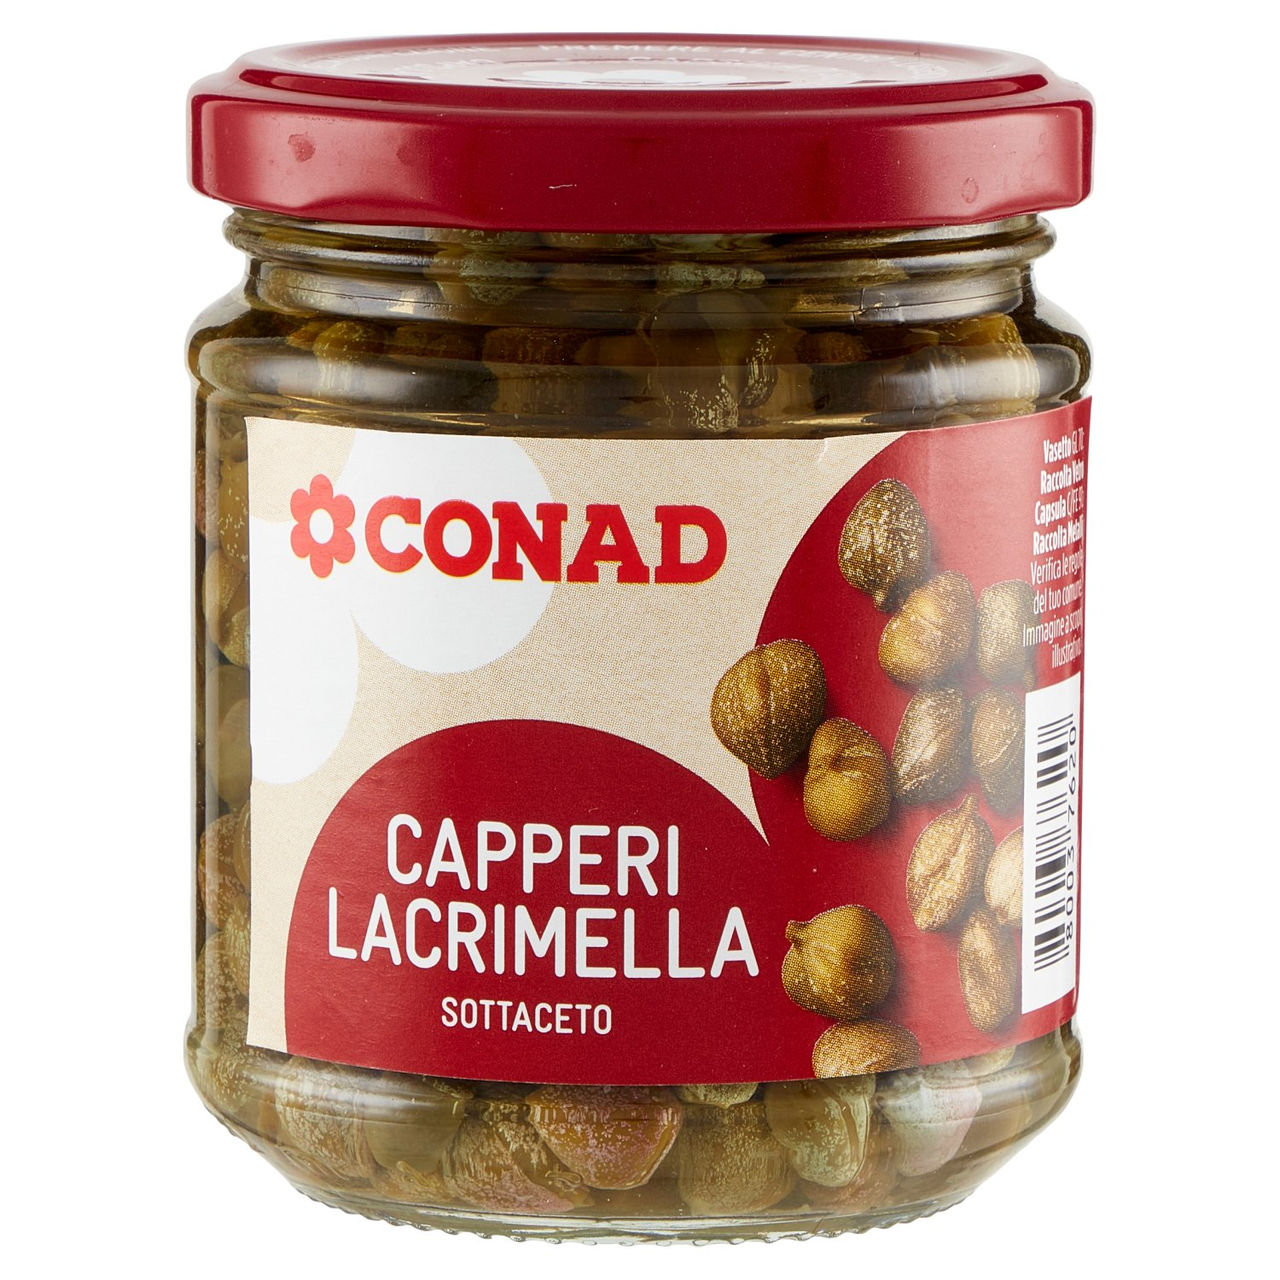 Capperi Lacrimella Sottaceto 210 g Conad online